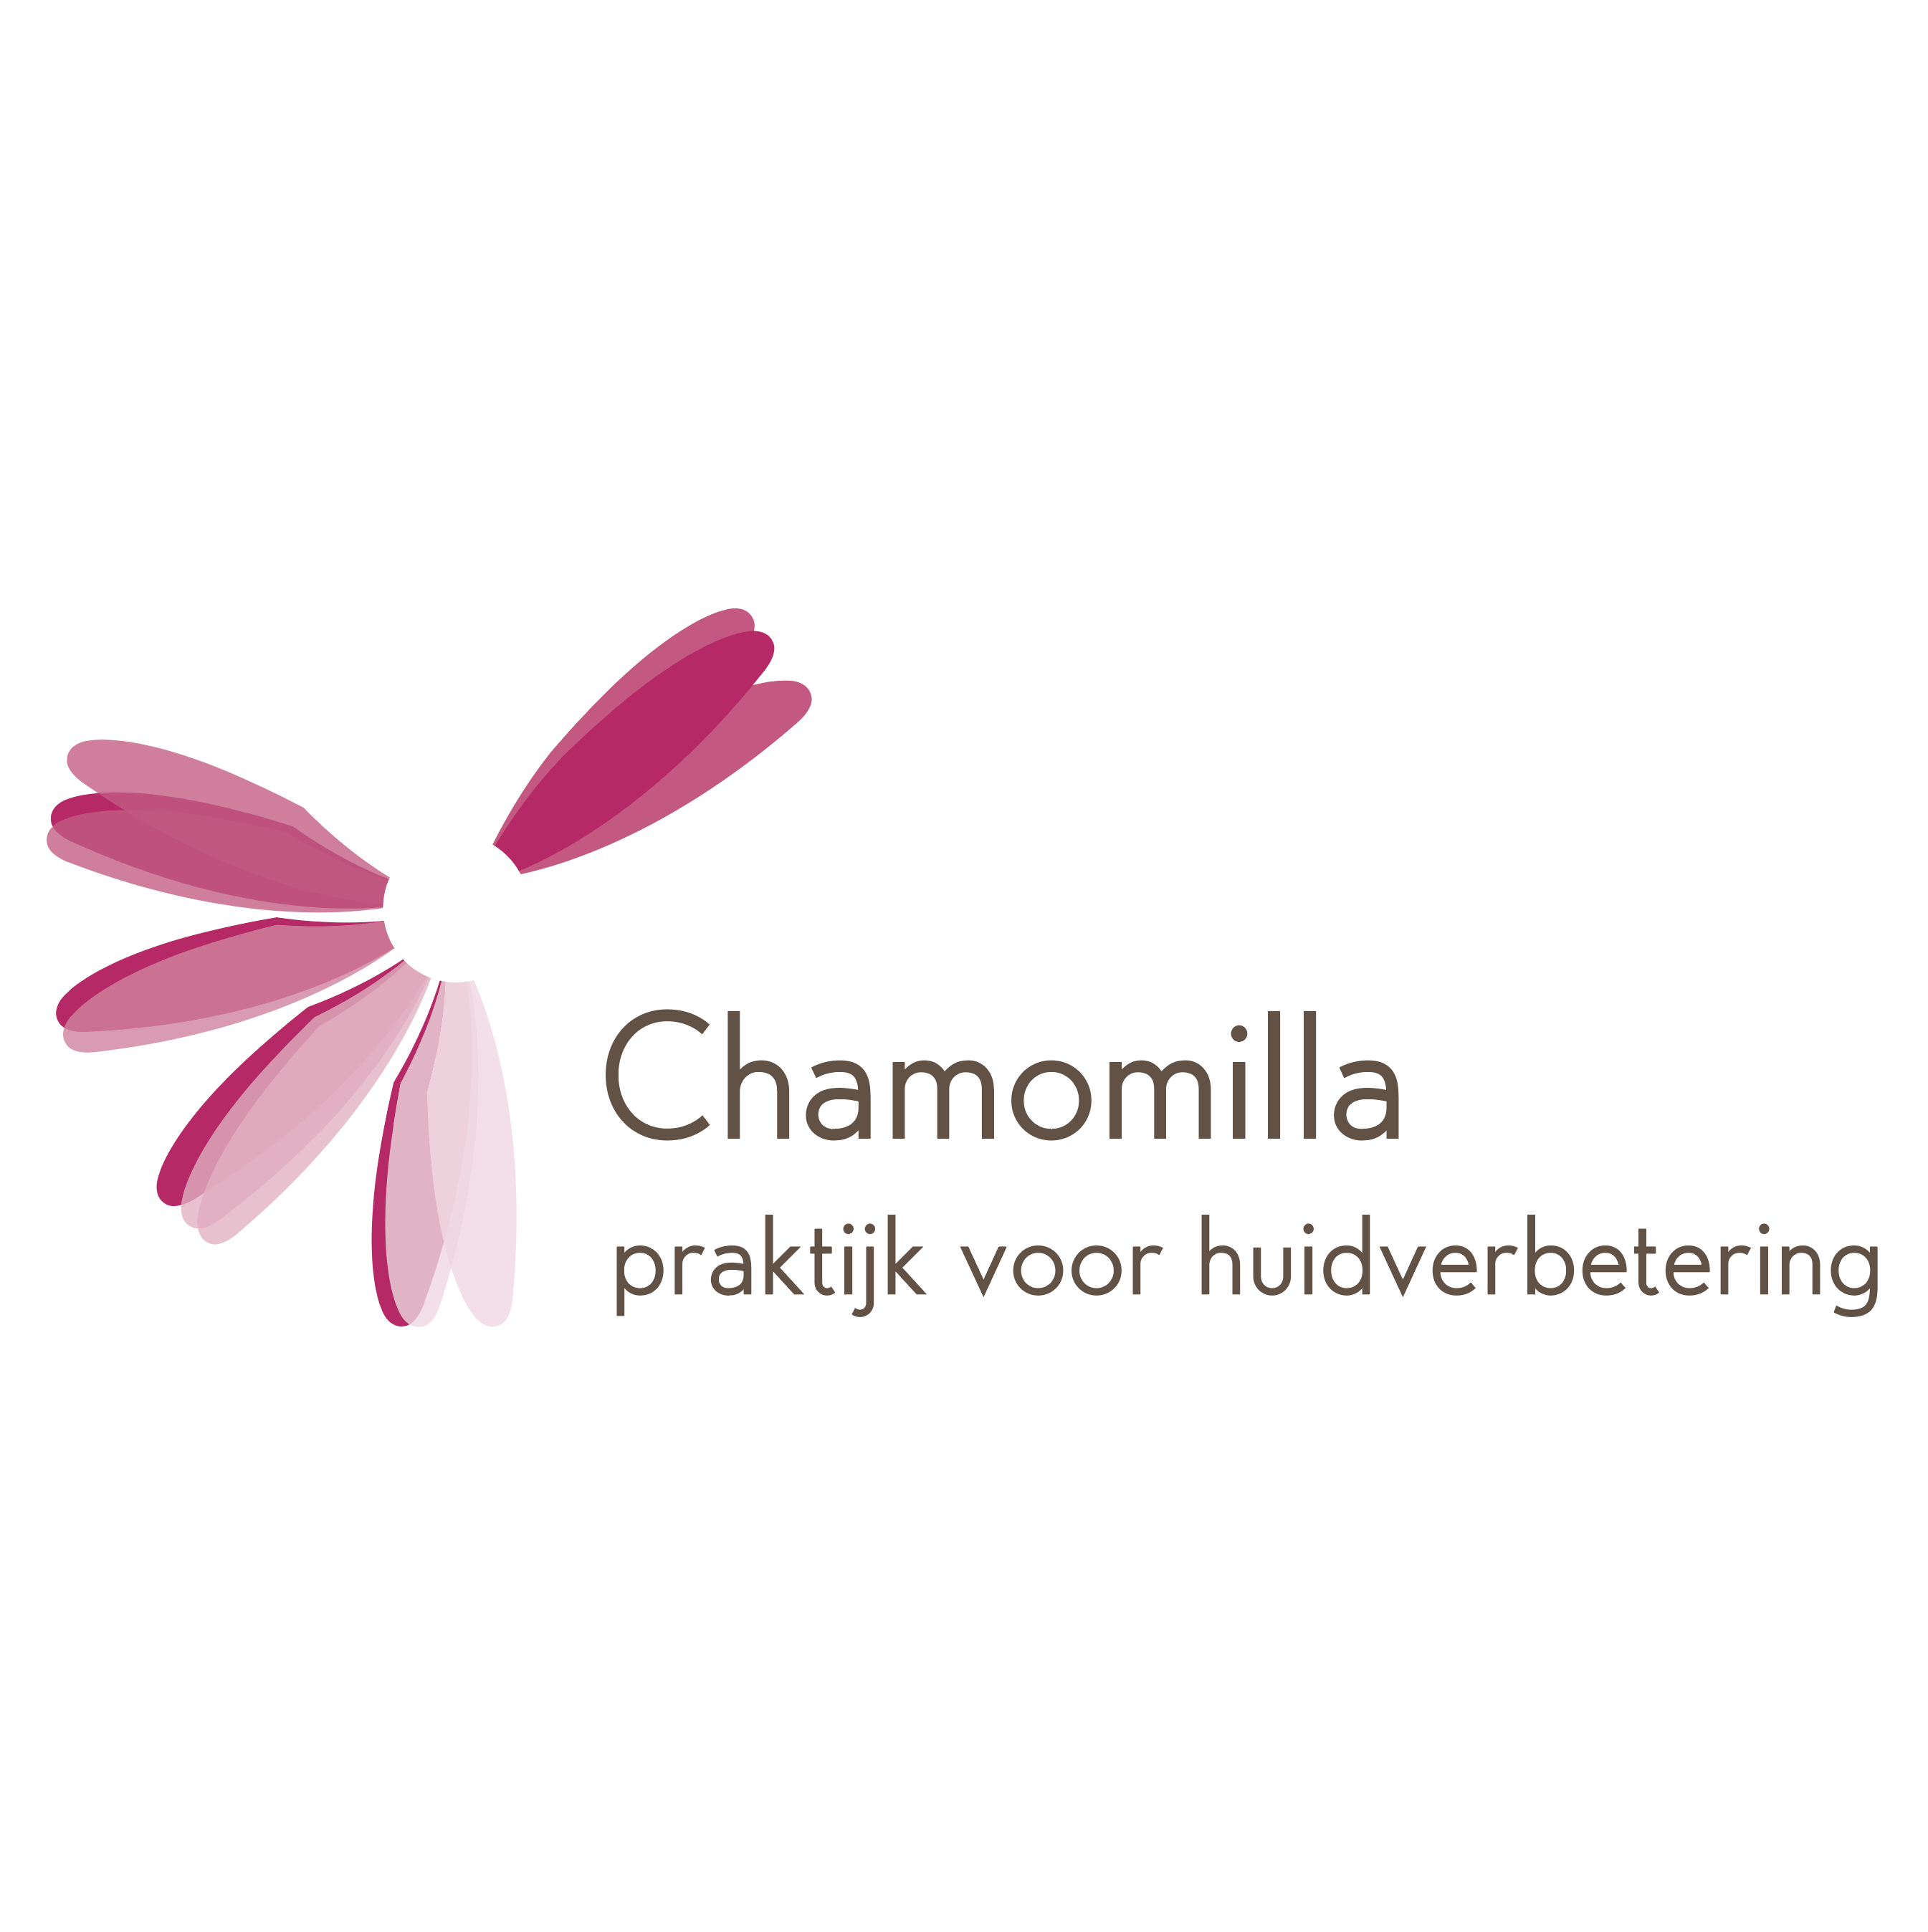 Chamomilla sponsor